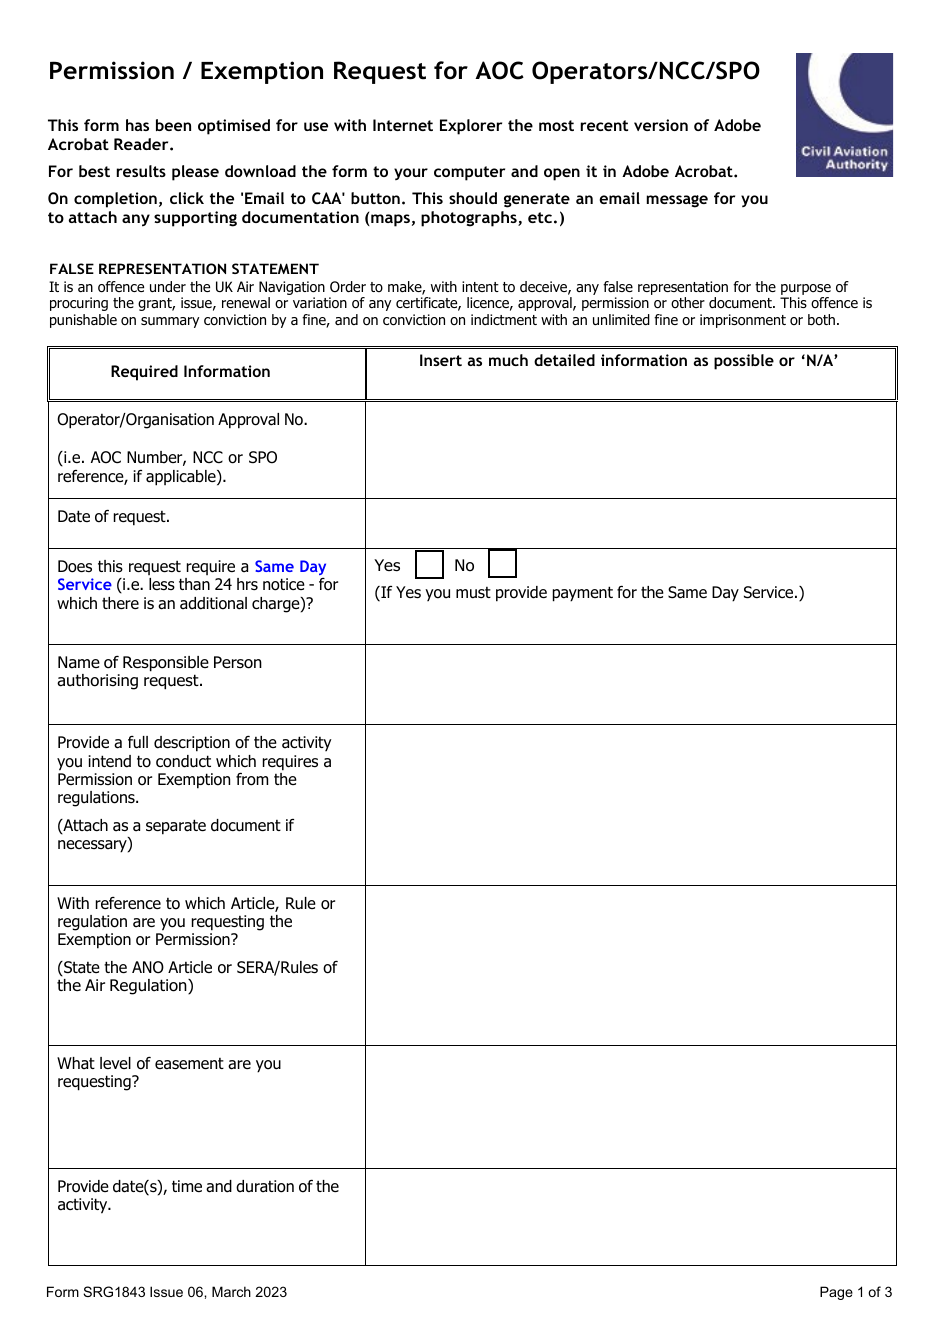 Form SRG1843 Permission / Exemption Request for Aoc Operators / Ncc / Spo - United Kingdom, Page 1